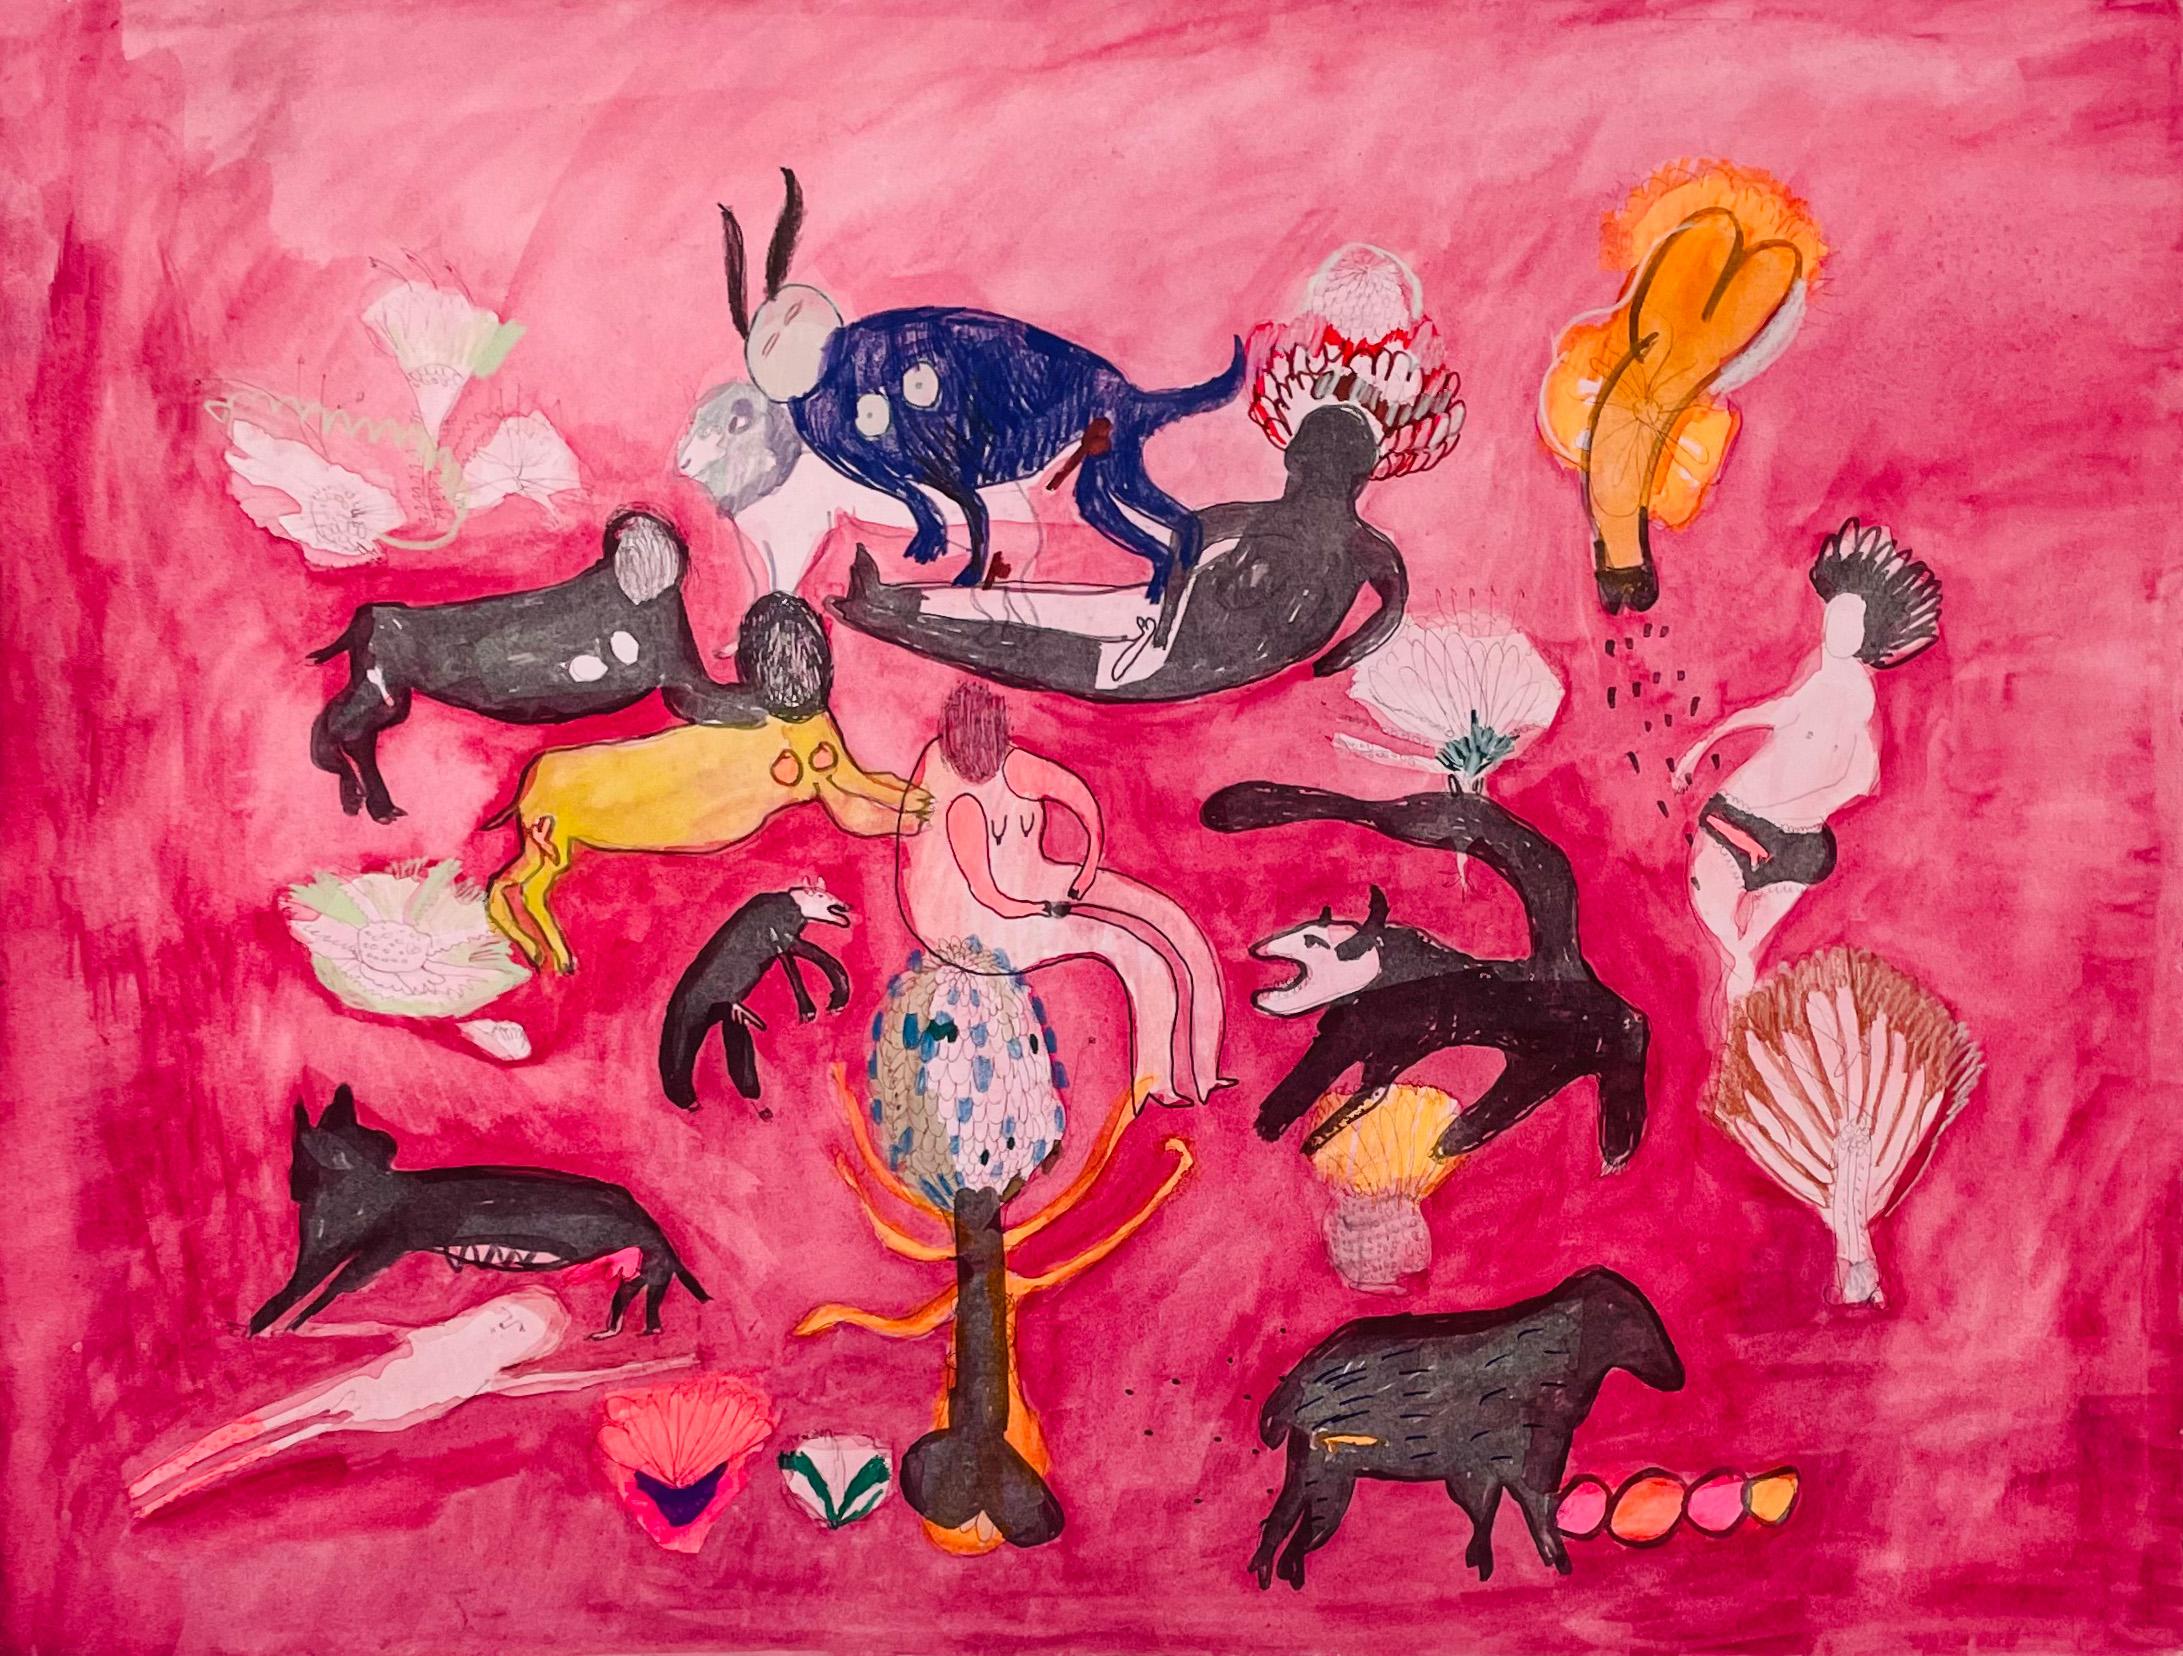 Yanieb Fabre Animal Print - "Yo animal" contemporary lithograph pink interviened fertility animals 